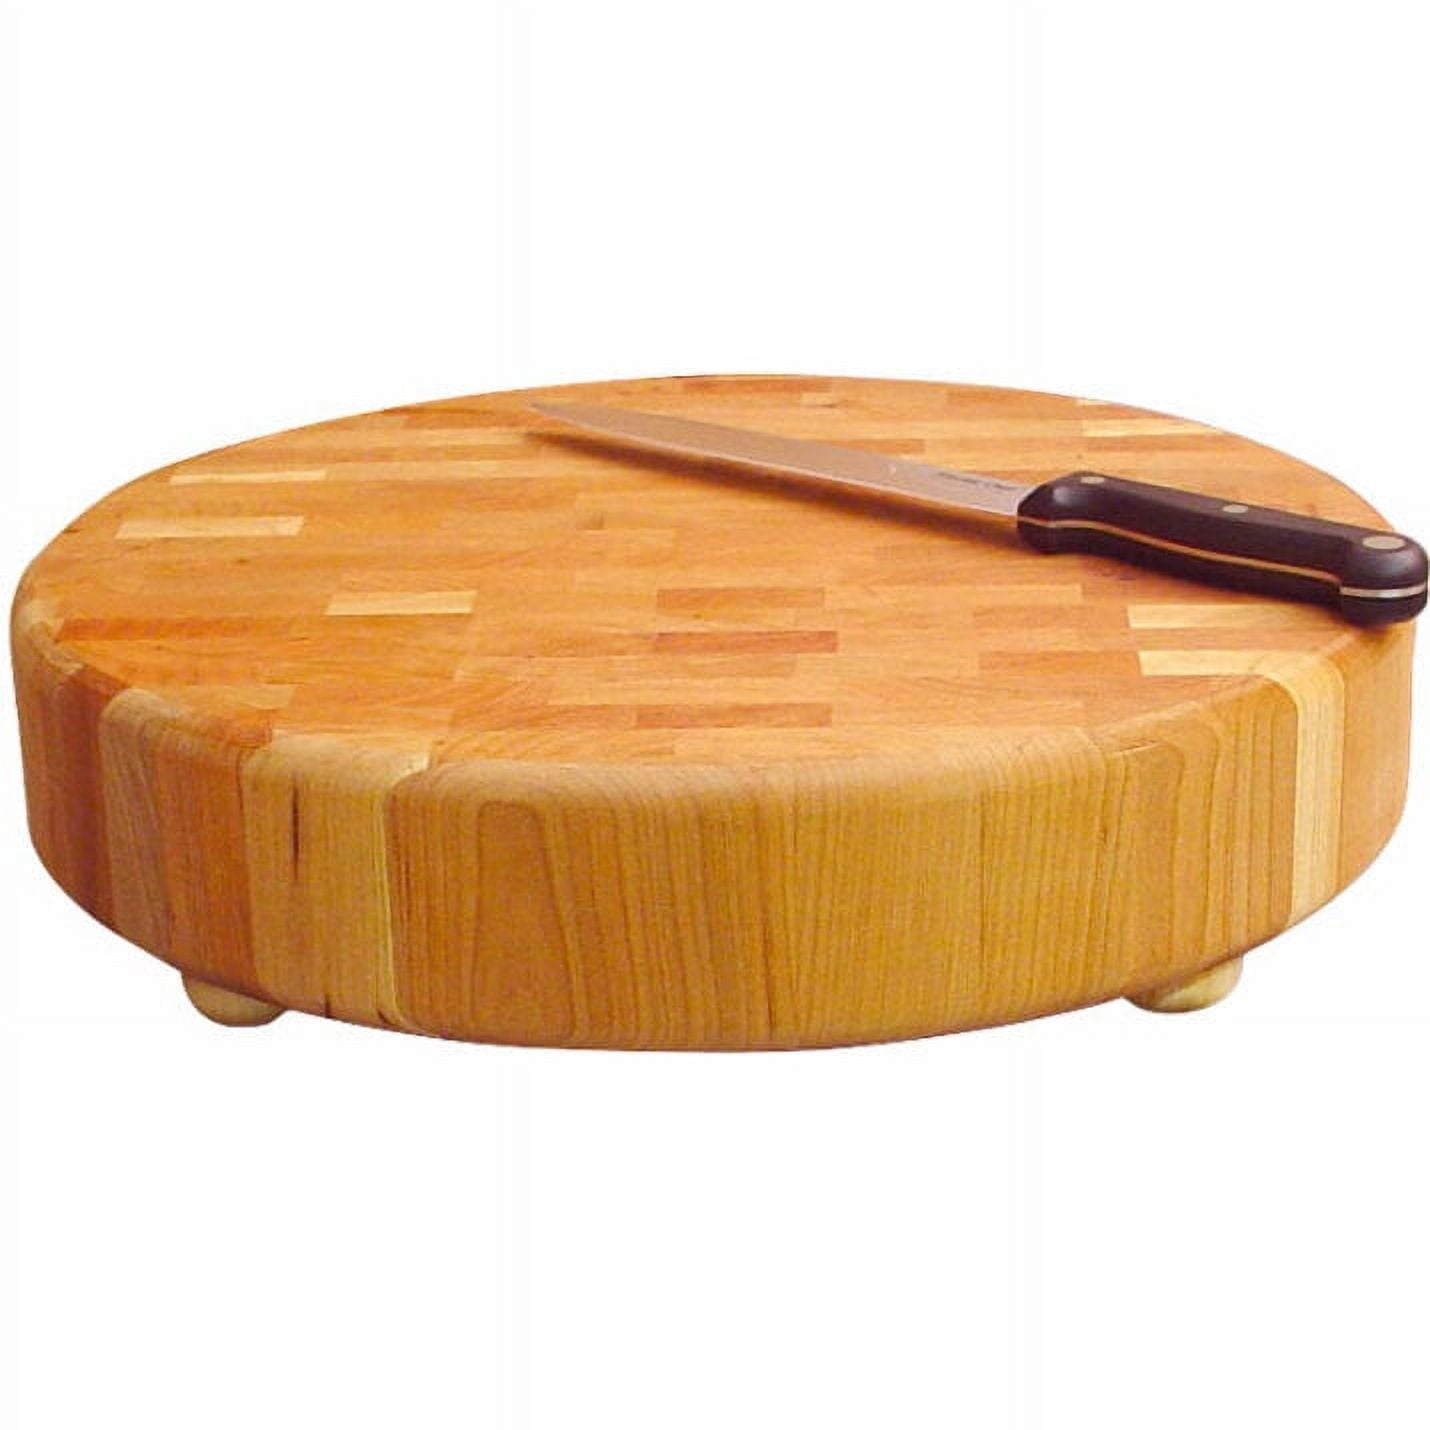 Catskill Craftsmen Pro Series Hardwood Reversible Cutting Board